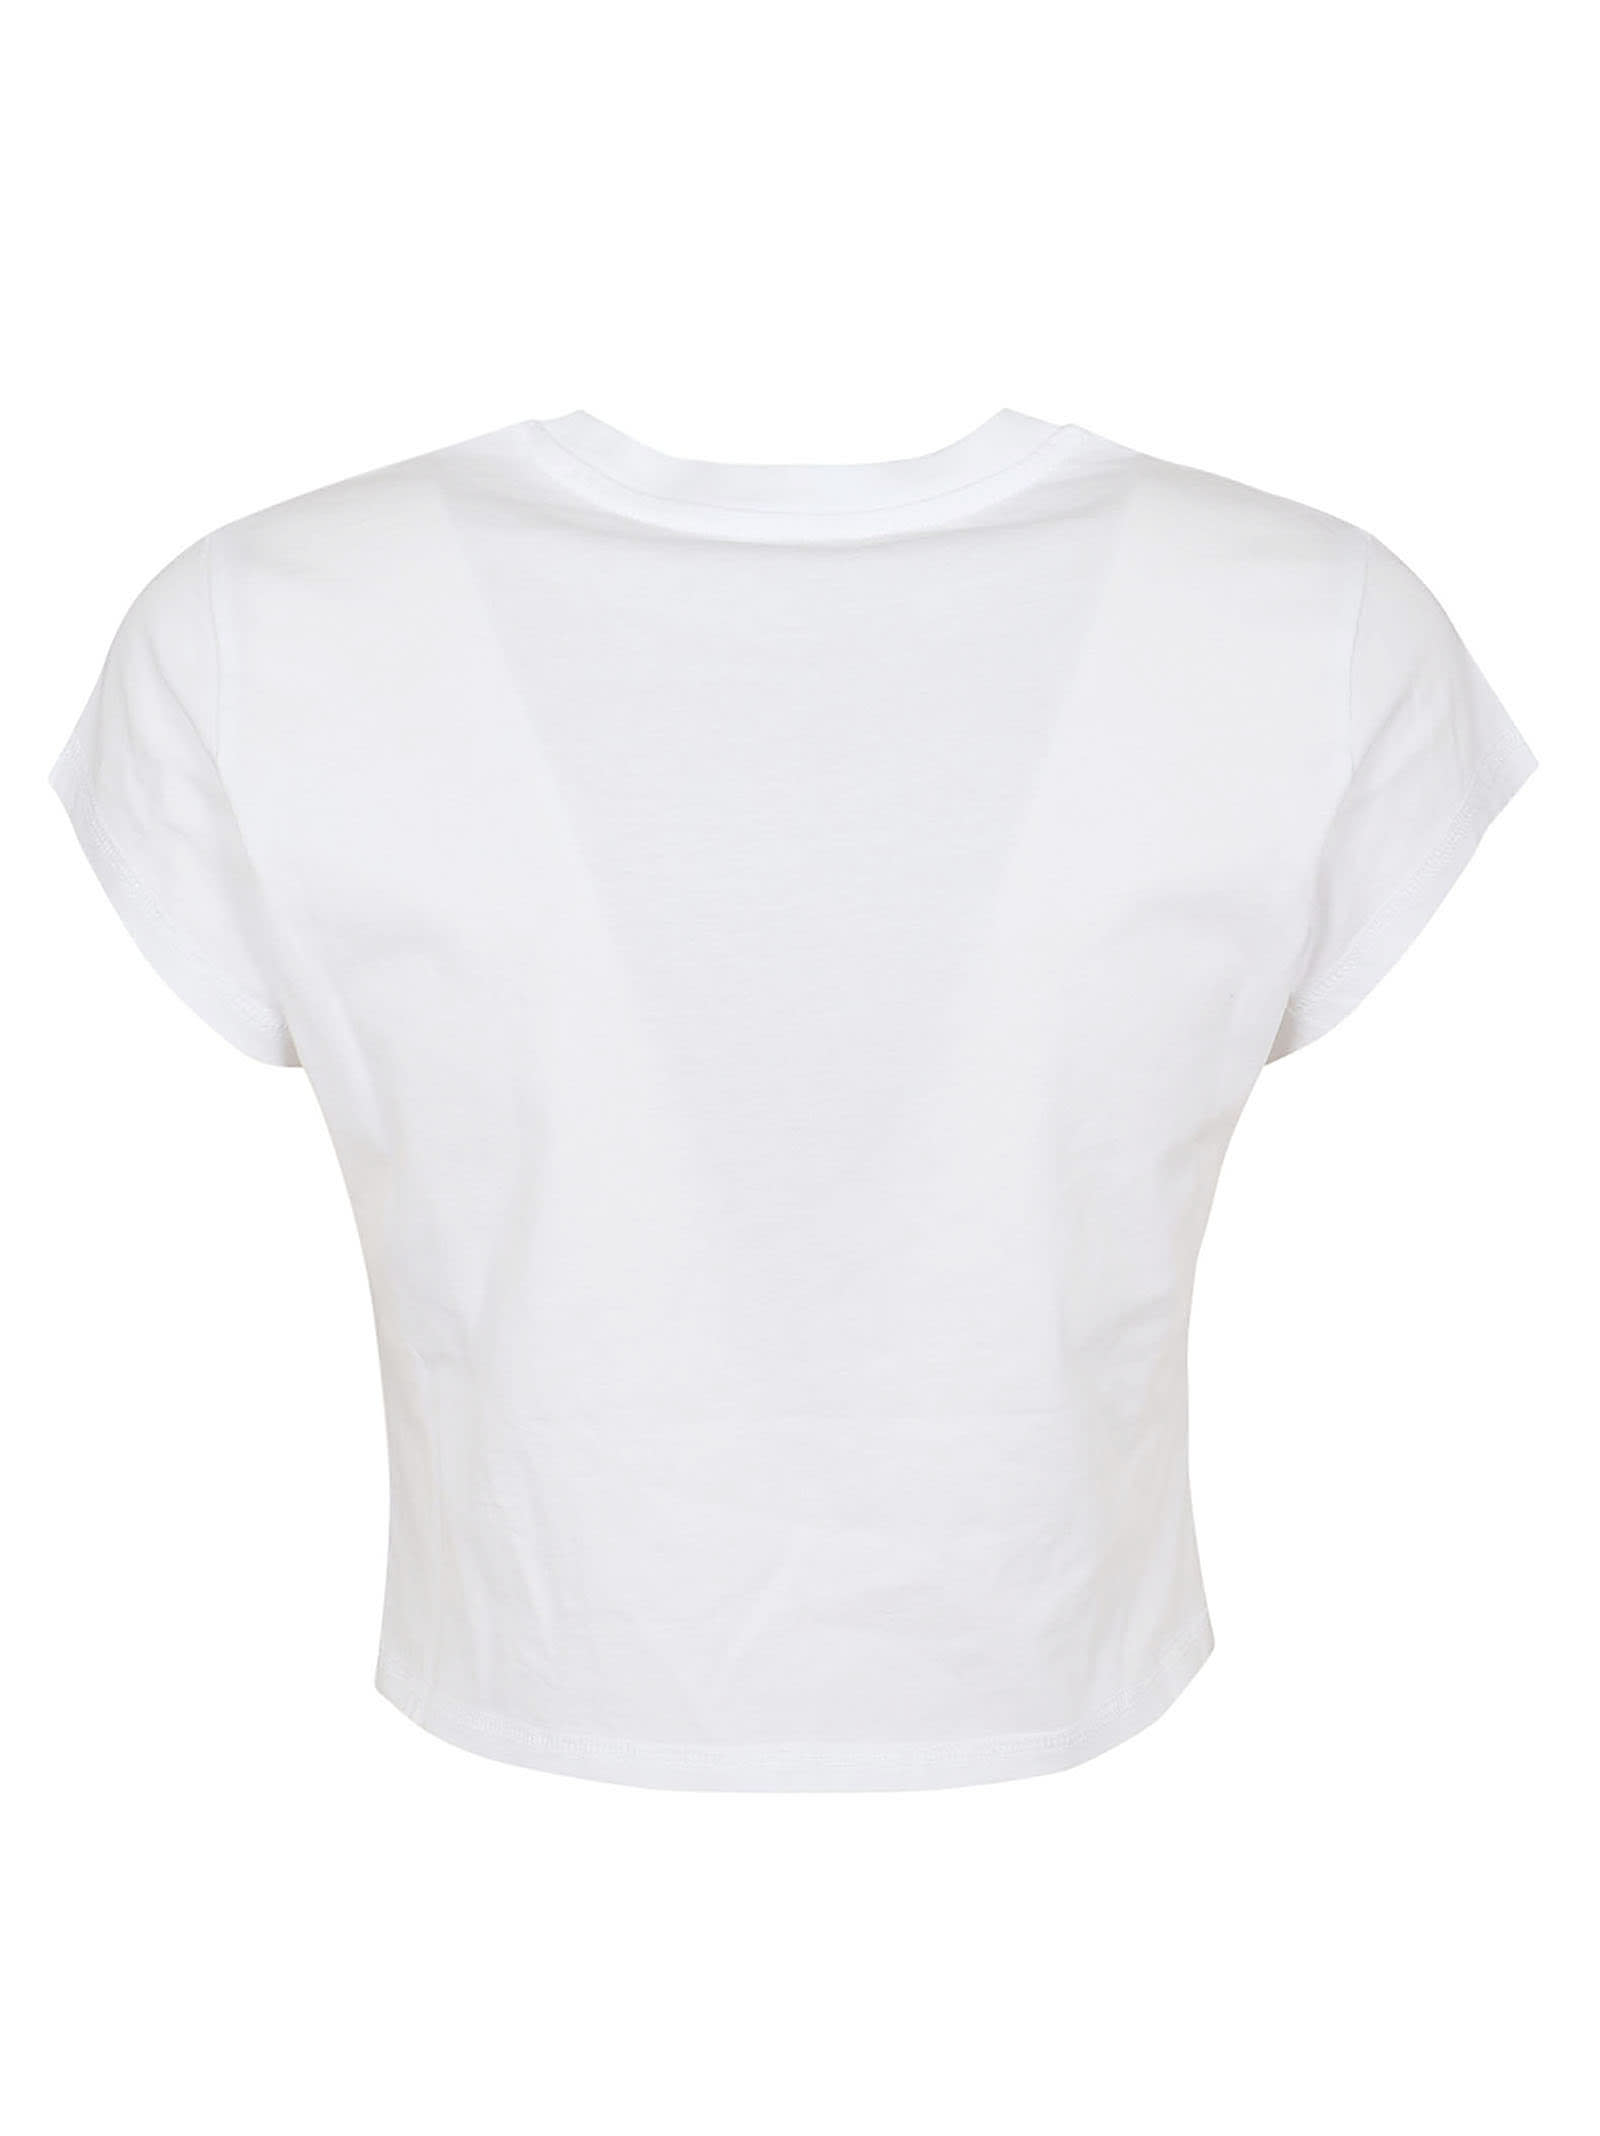 Shop Kenzo Boke Crest Baby T-shirt In White